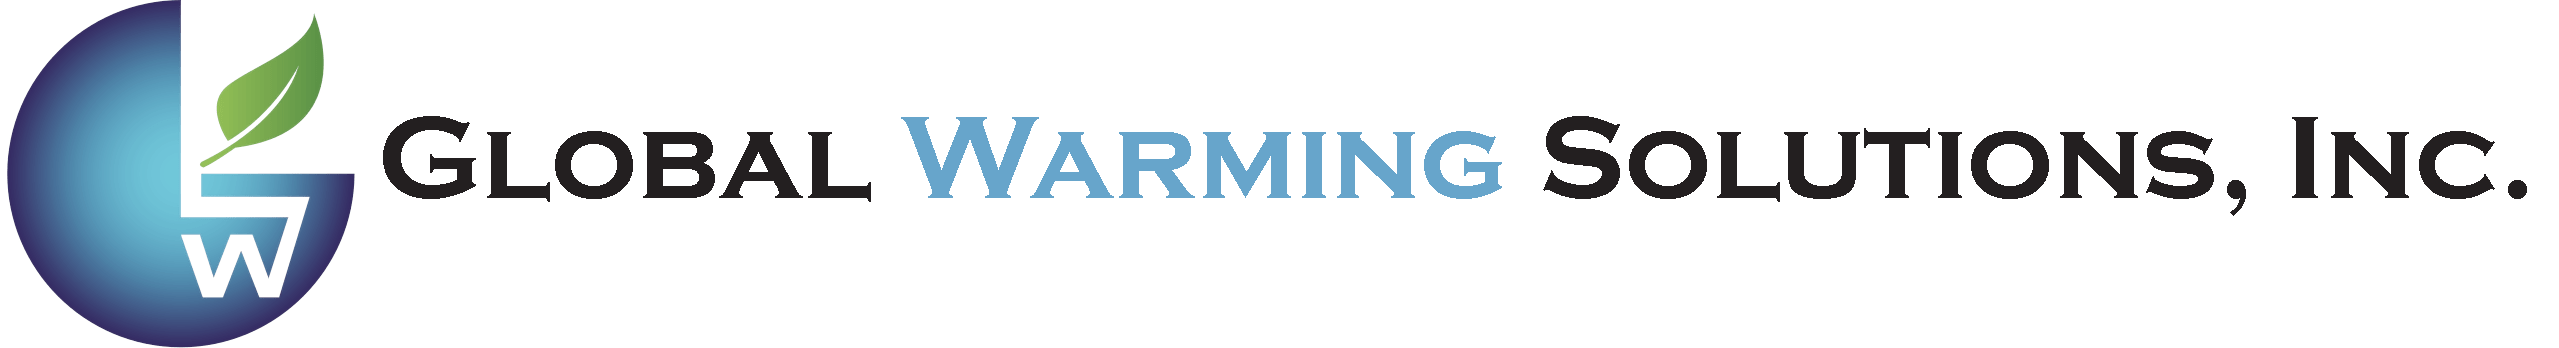 Global Warming Solutions, Inc. Logo